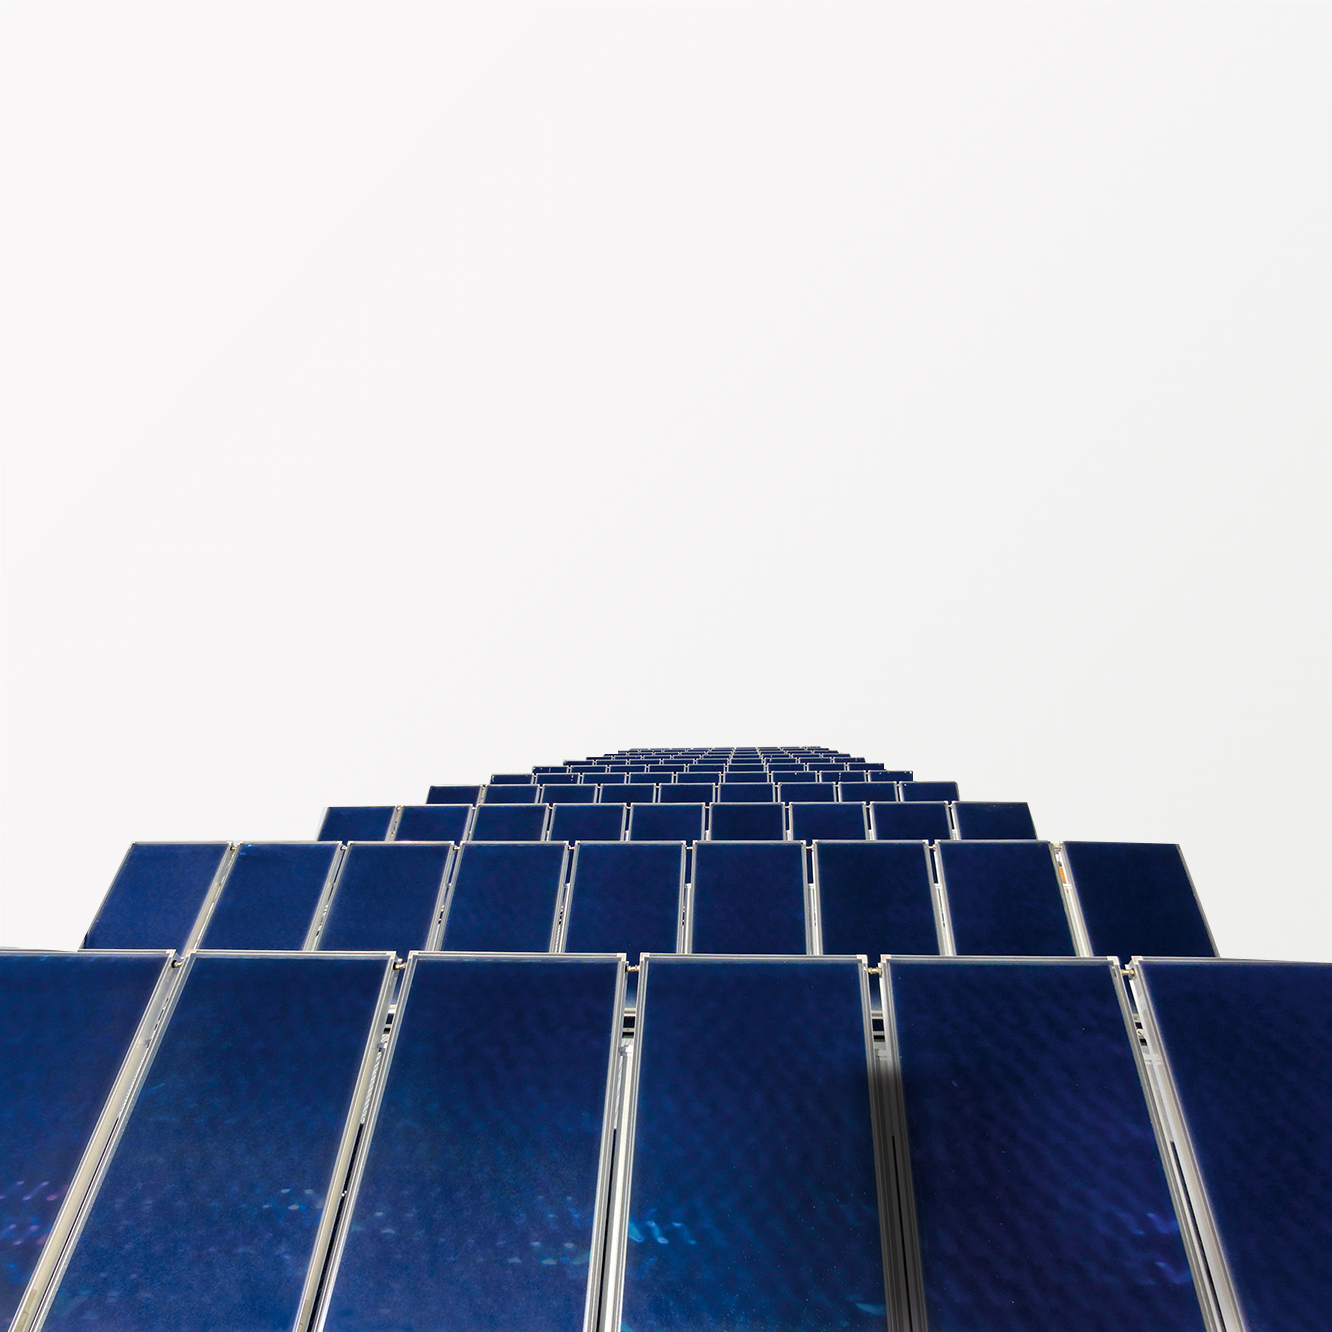 Large Weishaupt solar arrays